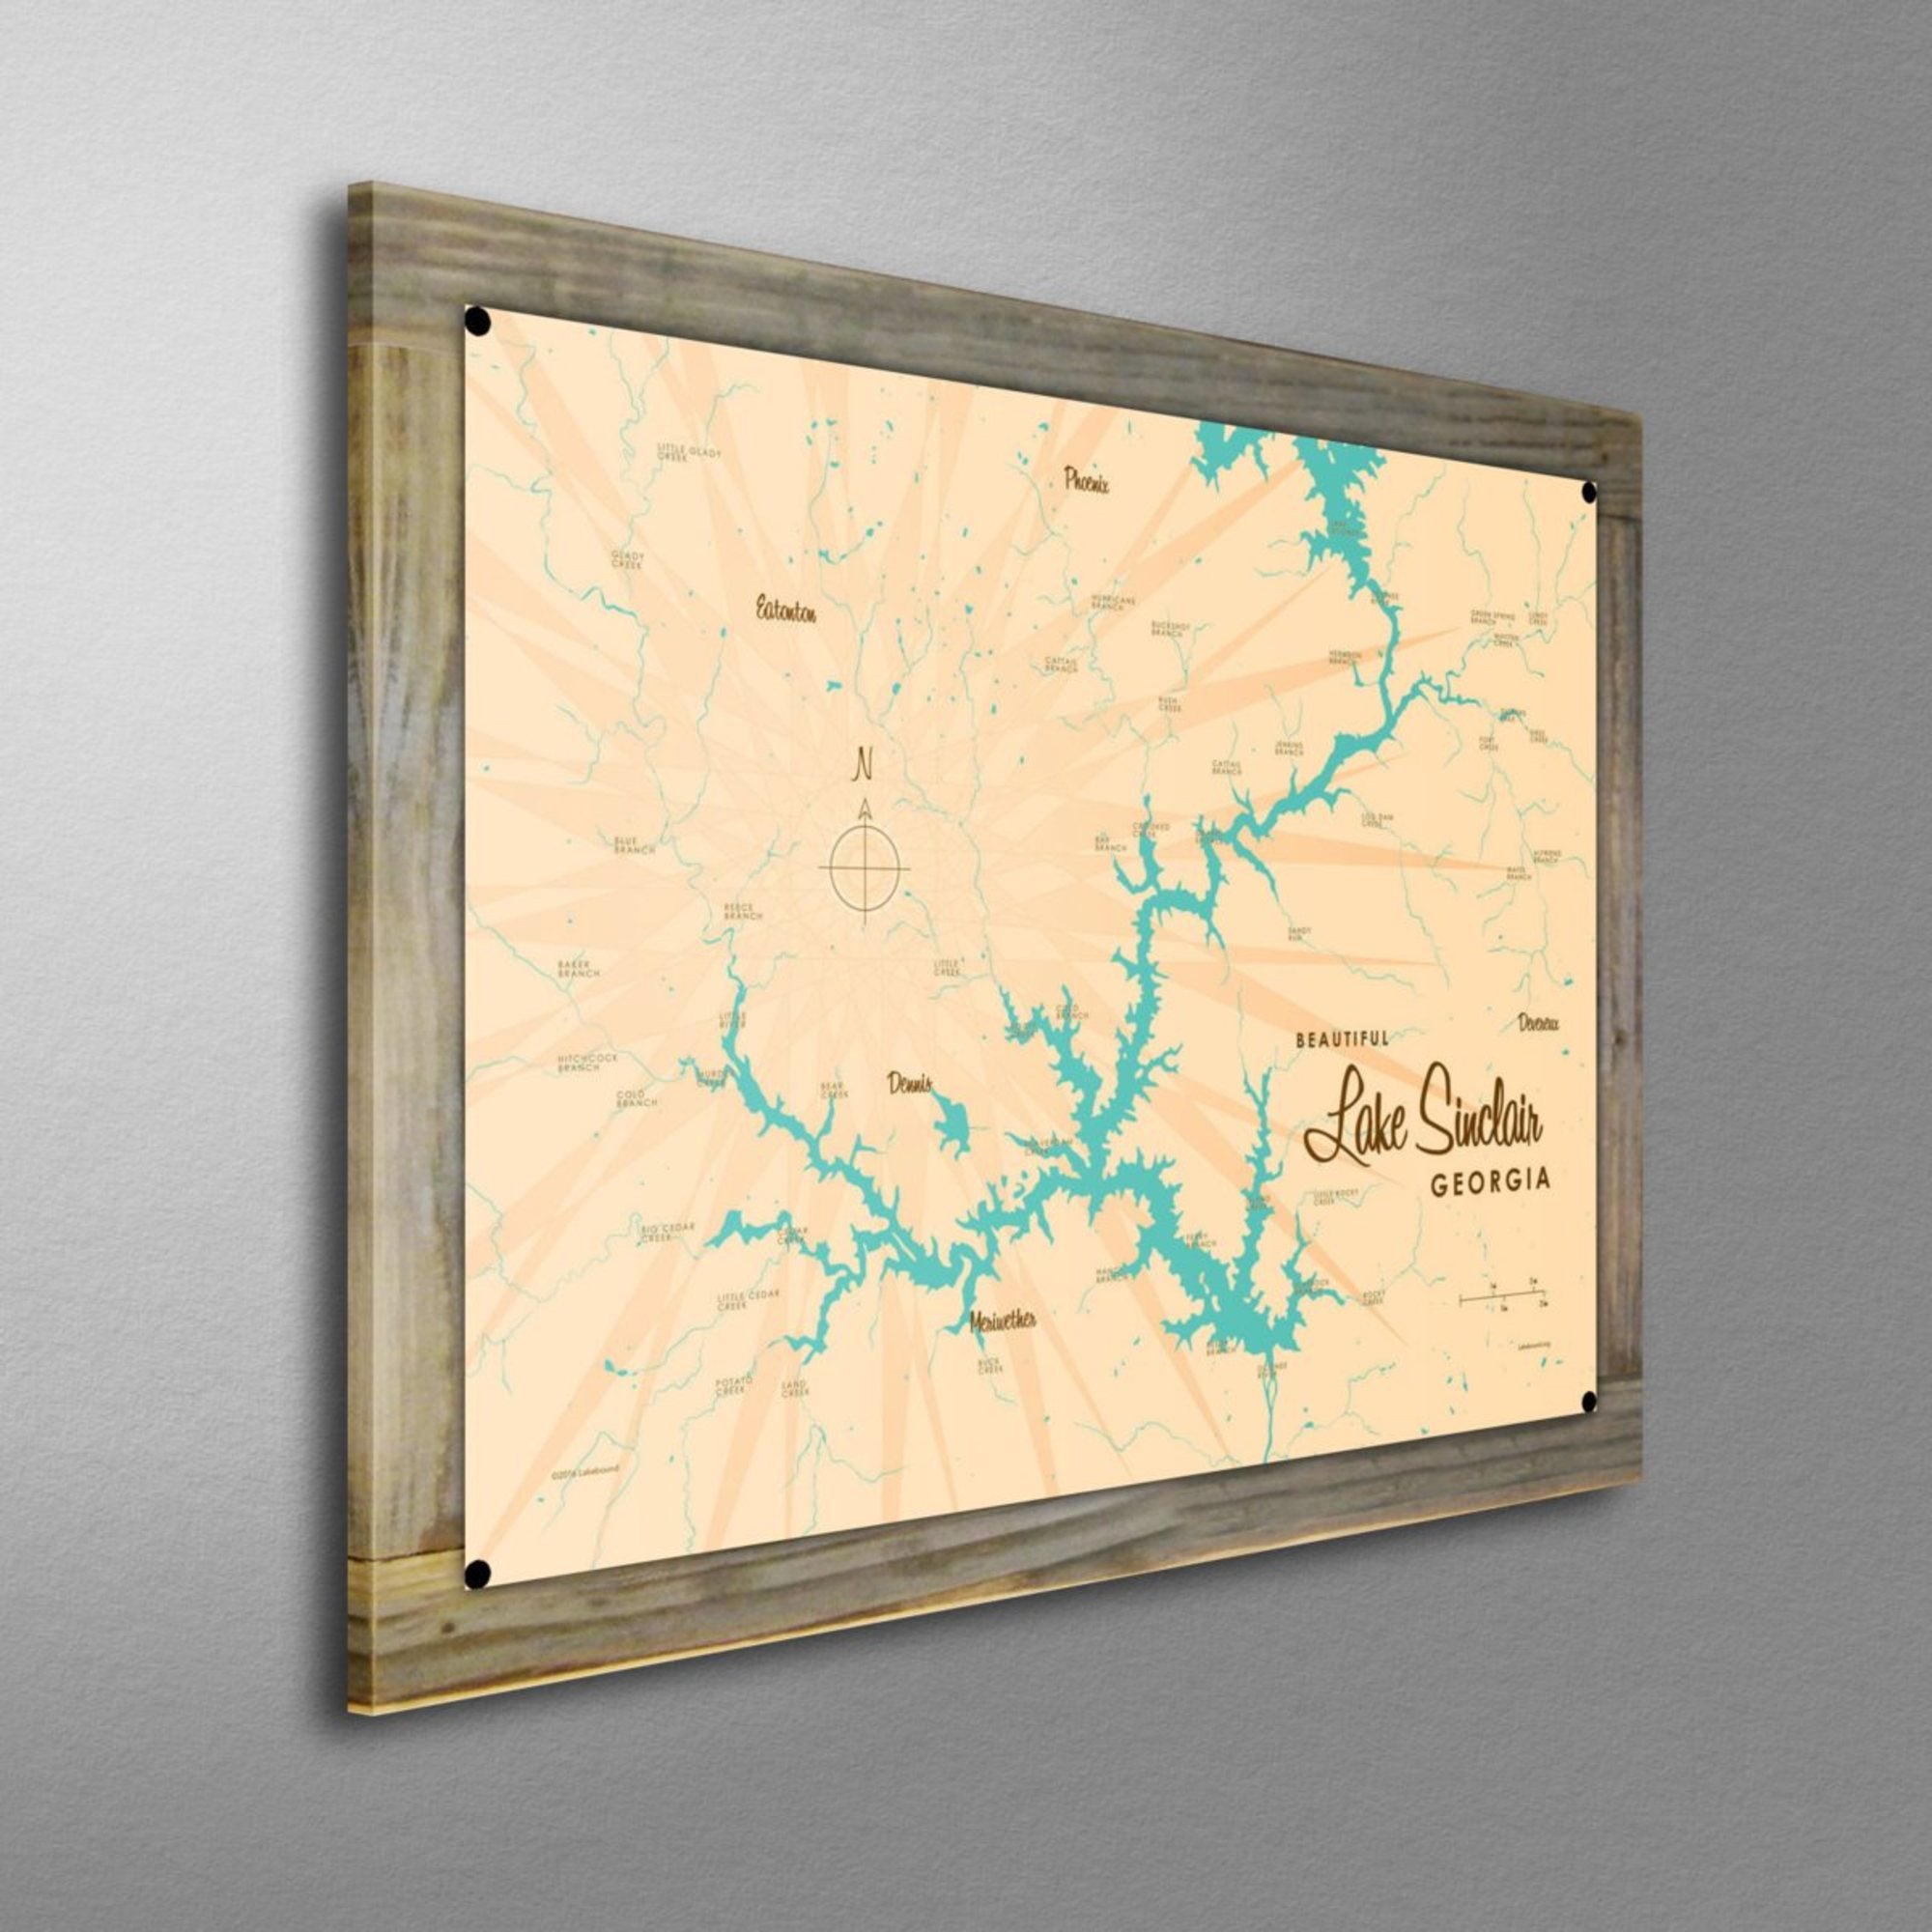 Lake Sinclair Georgia, Wood-Mounted Metal Sign Map Art